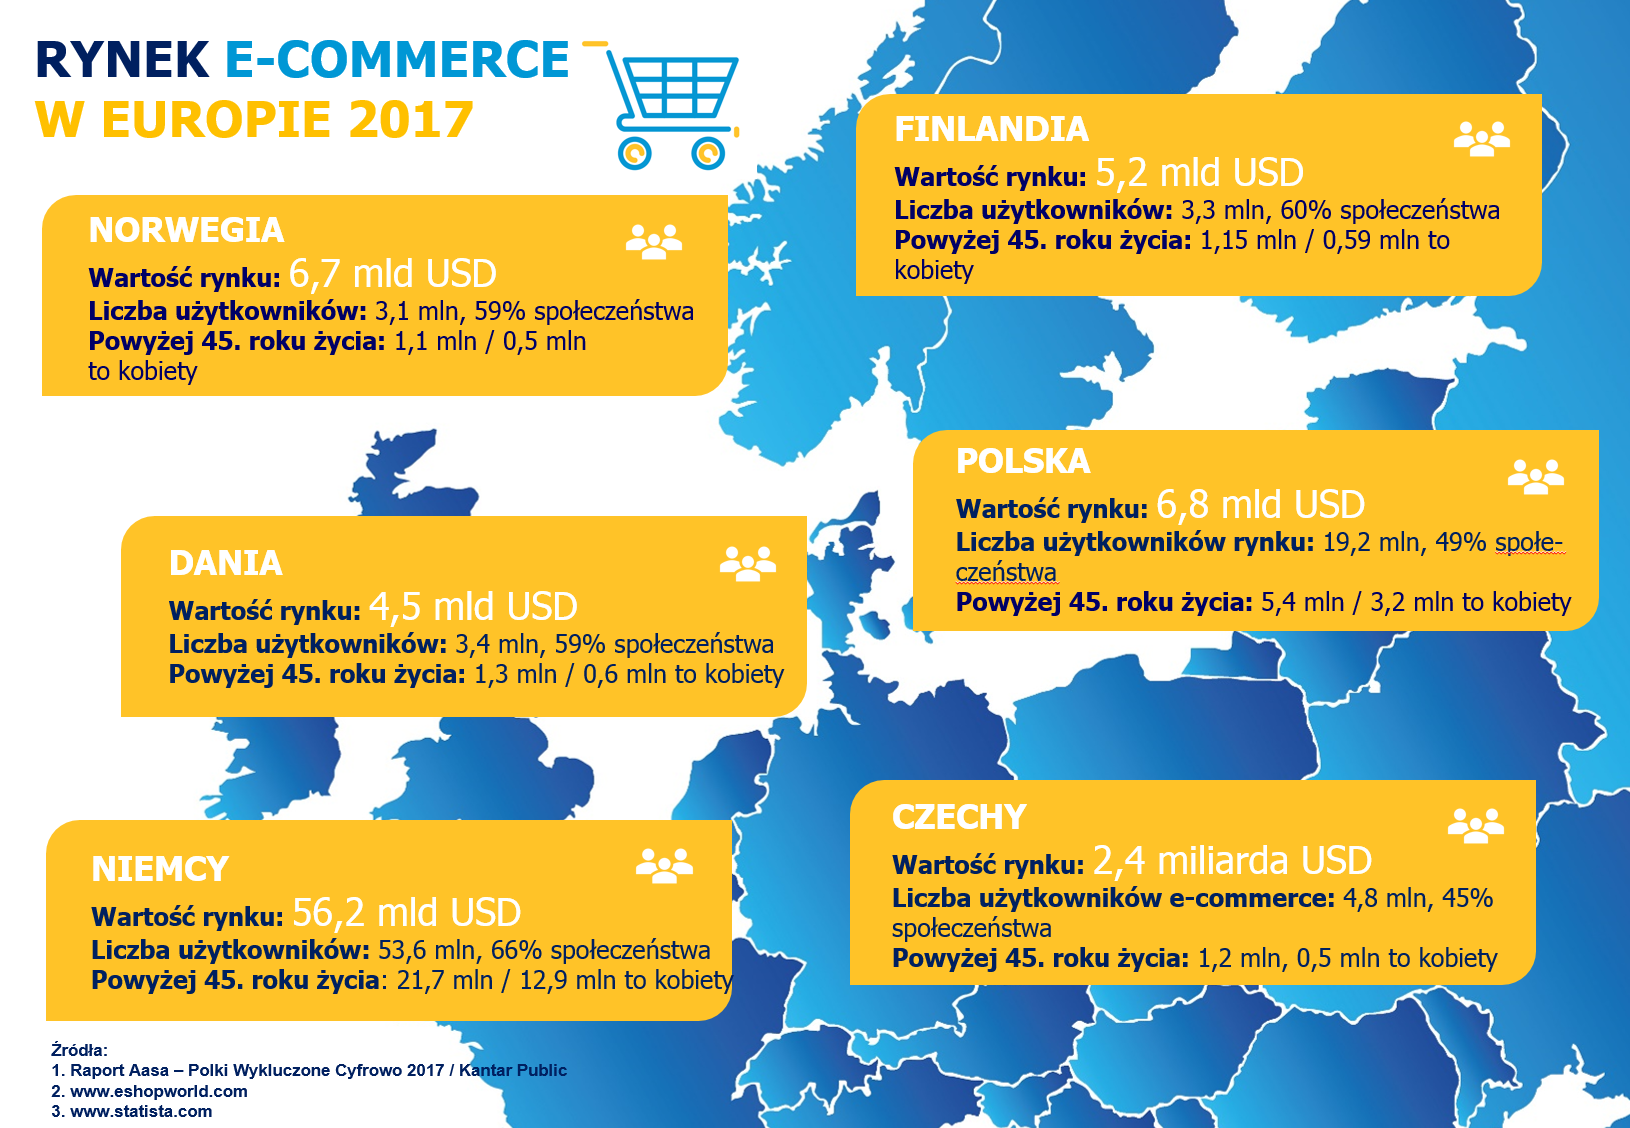 Rynek e-commerce w Europie.